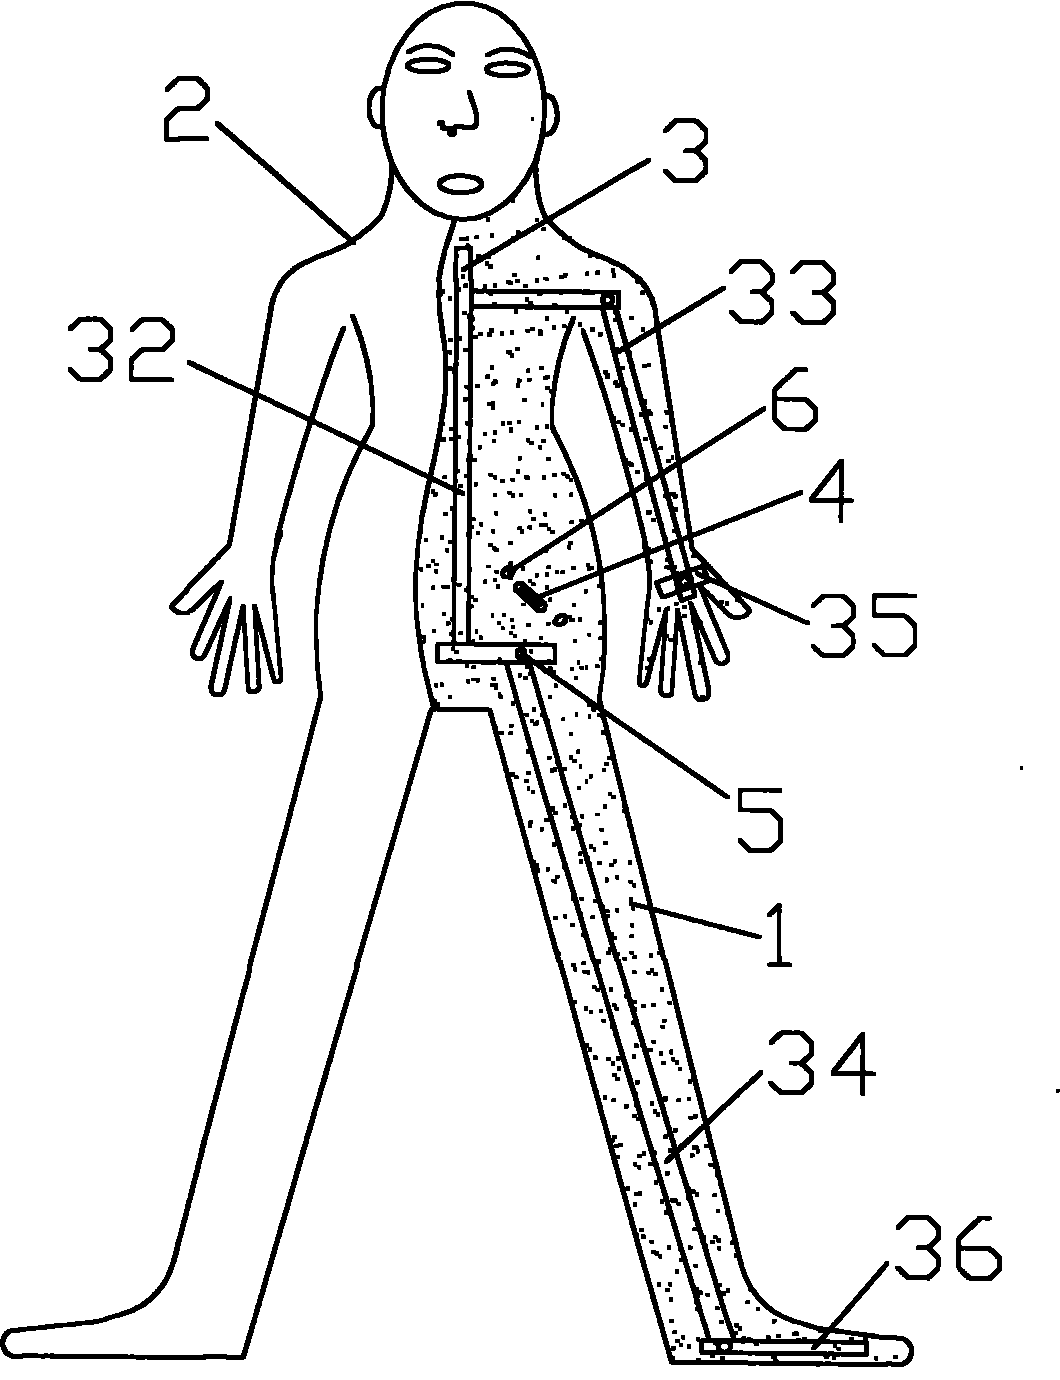 Simulation human body model